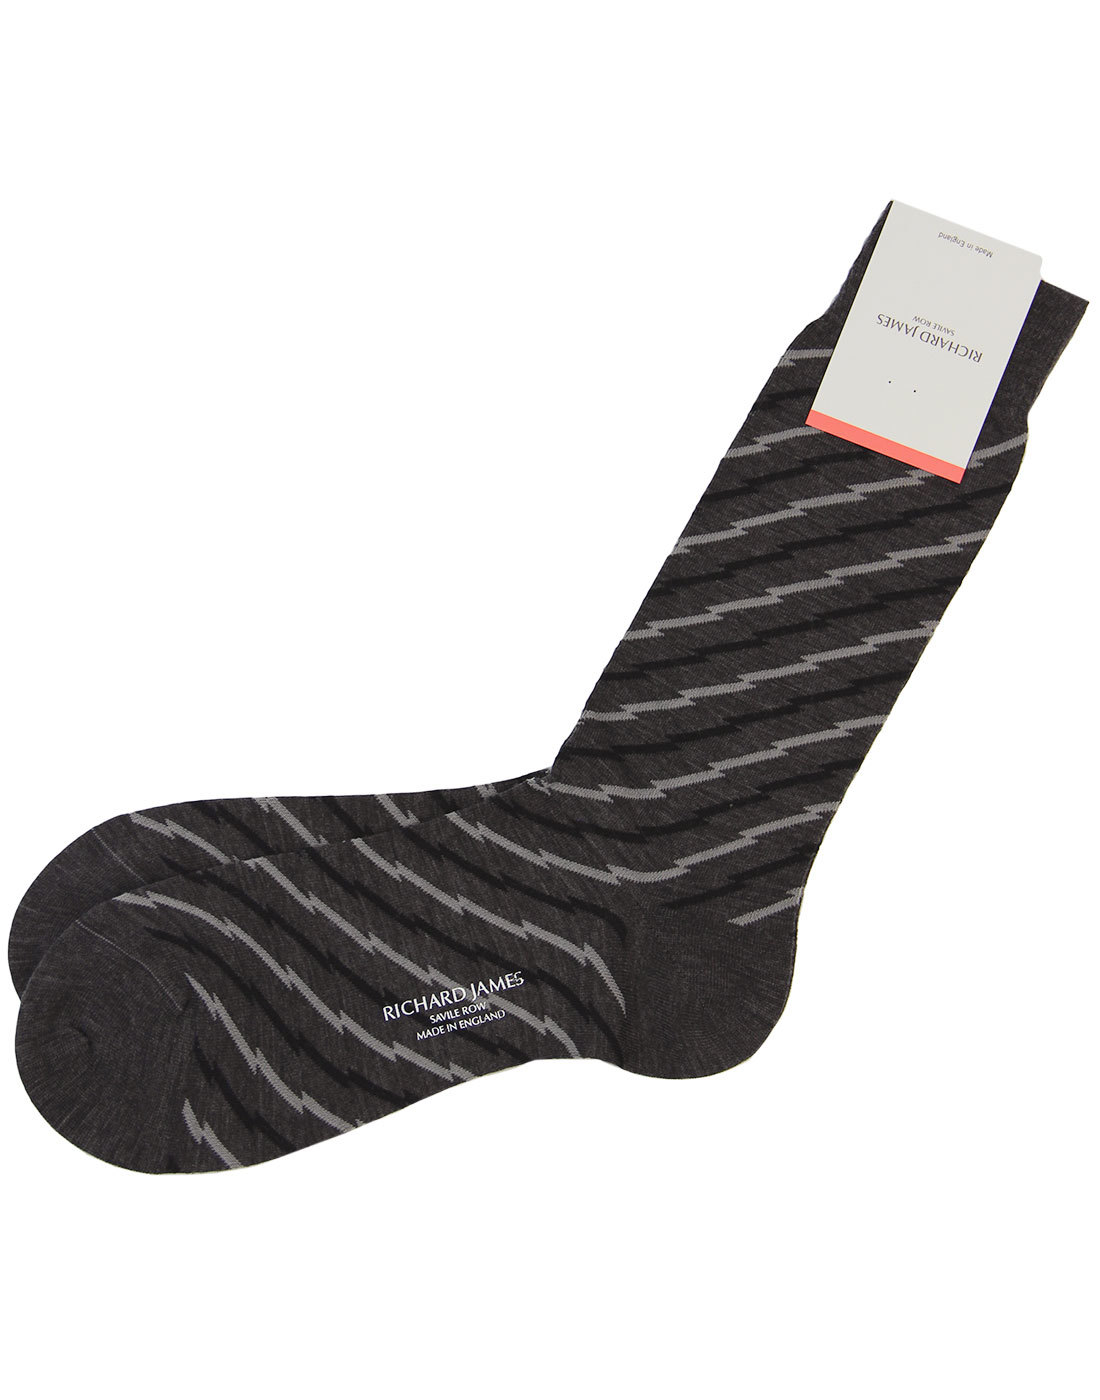 + Baradine RICHARD JAMES Made In England Socks (G)